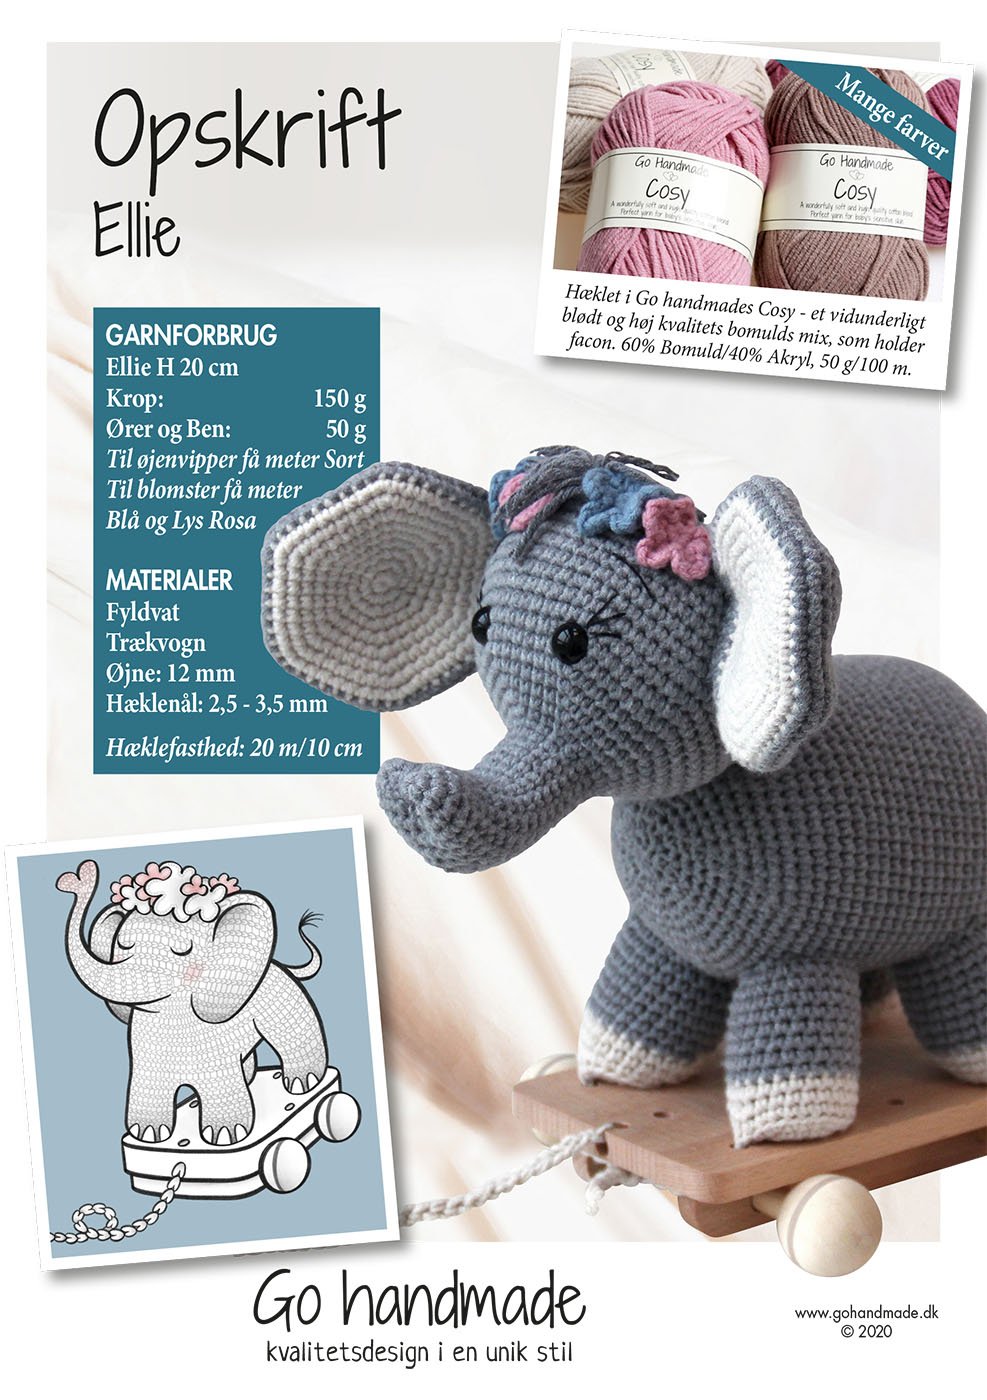 Ellie - DK - Animals and Cuddle cloths - Go handmade